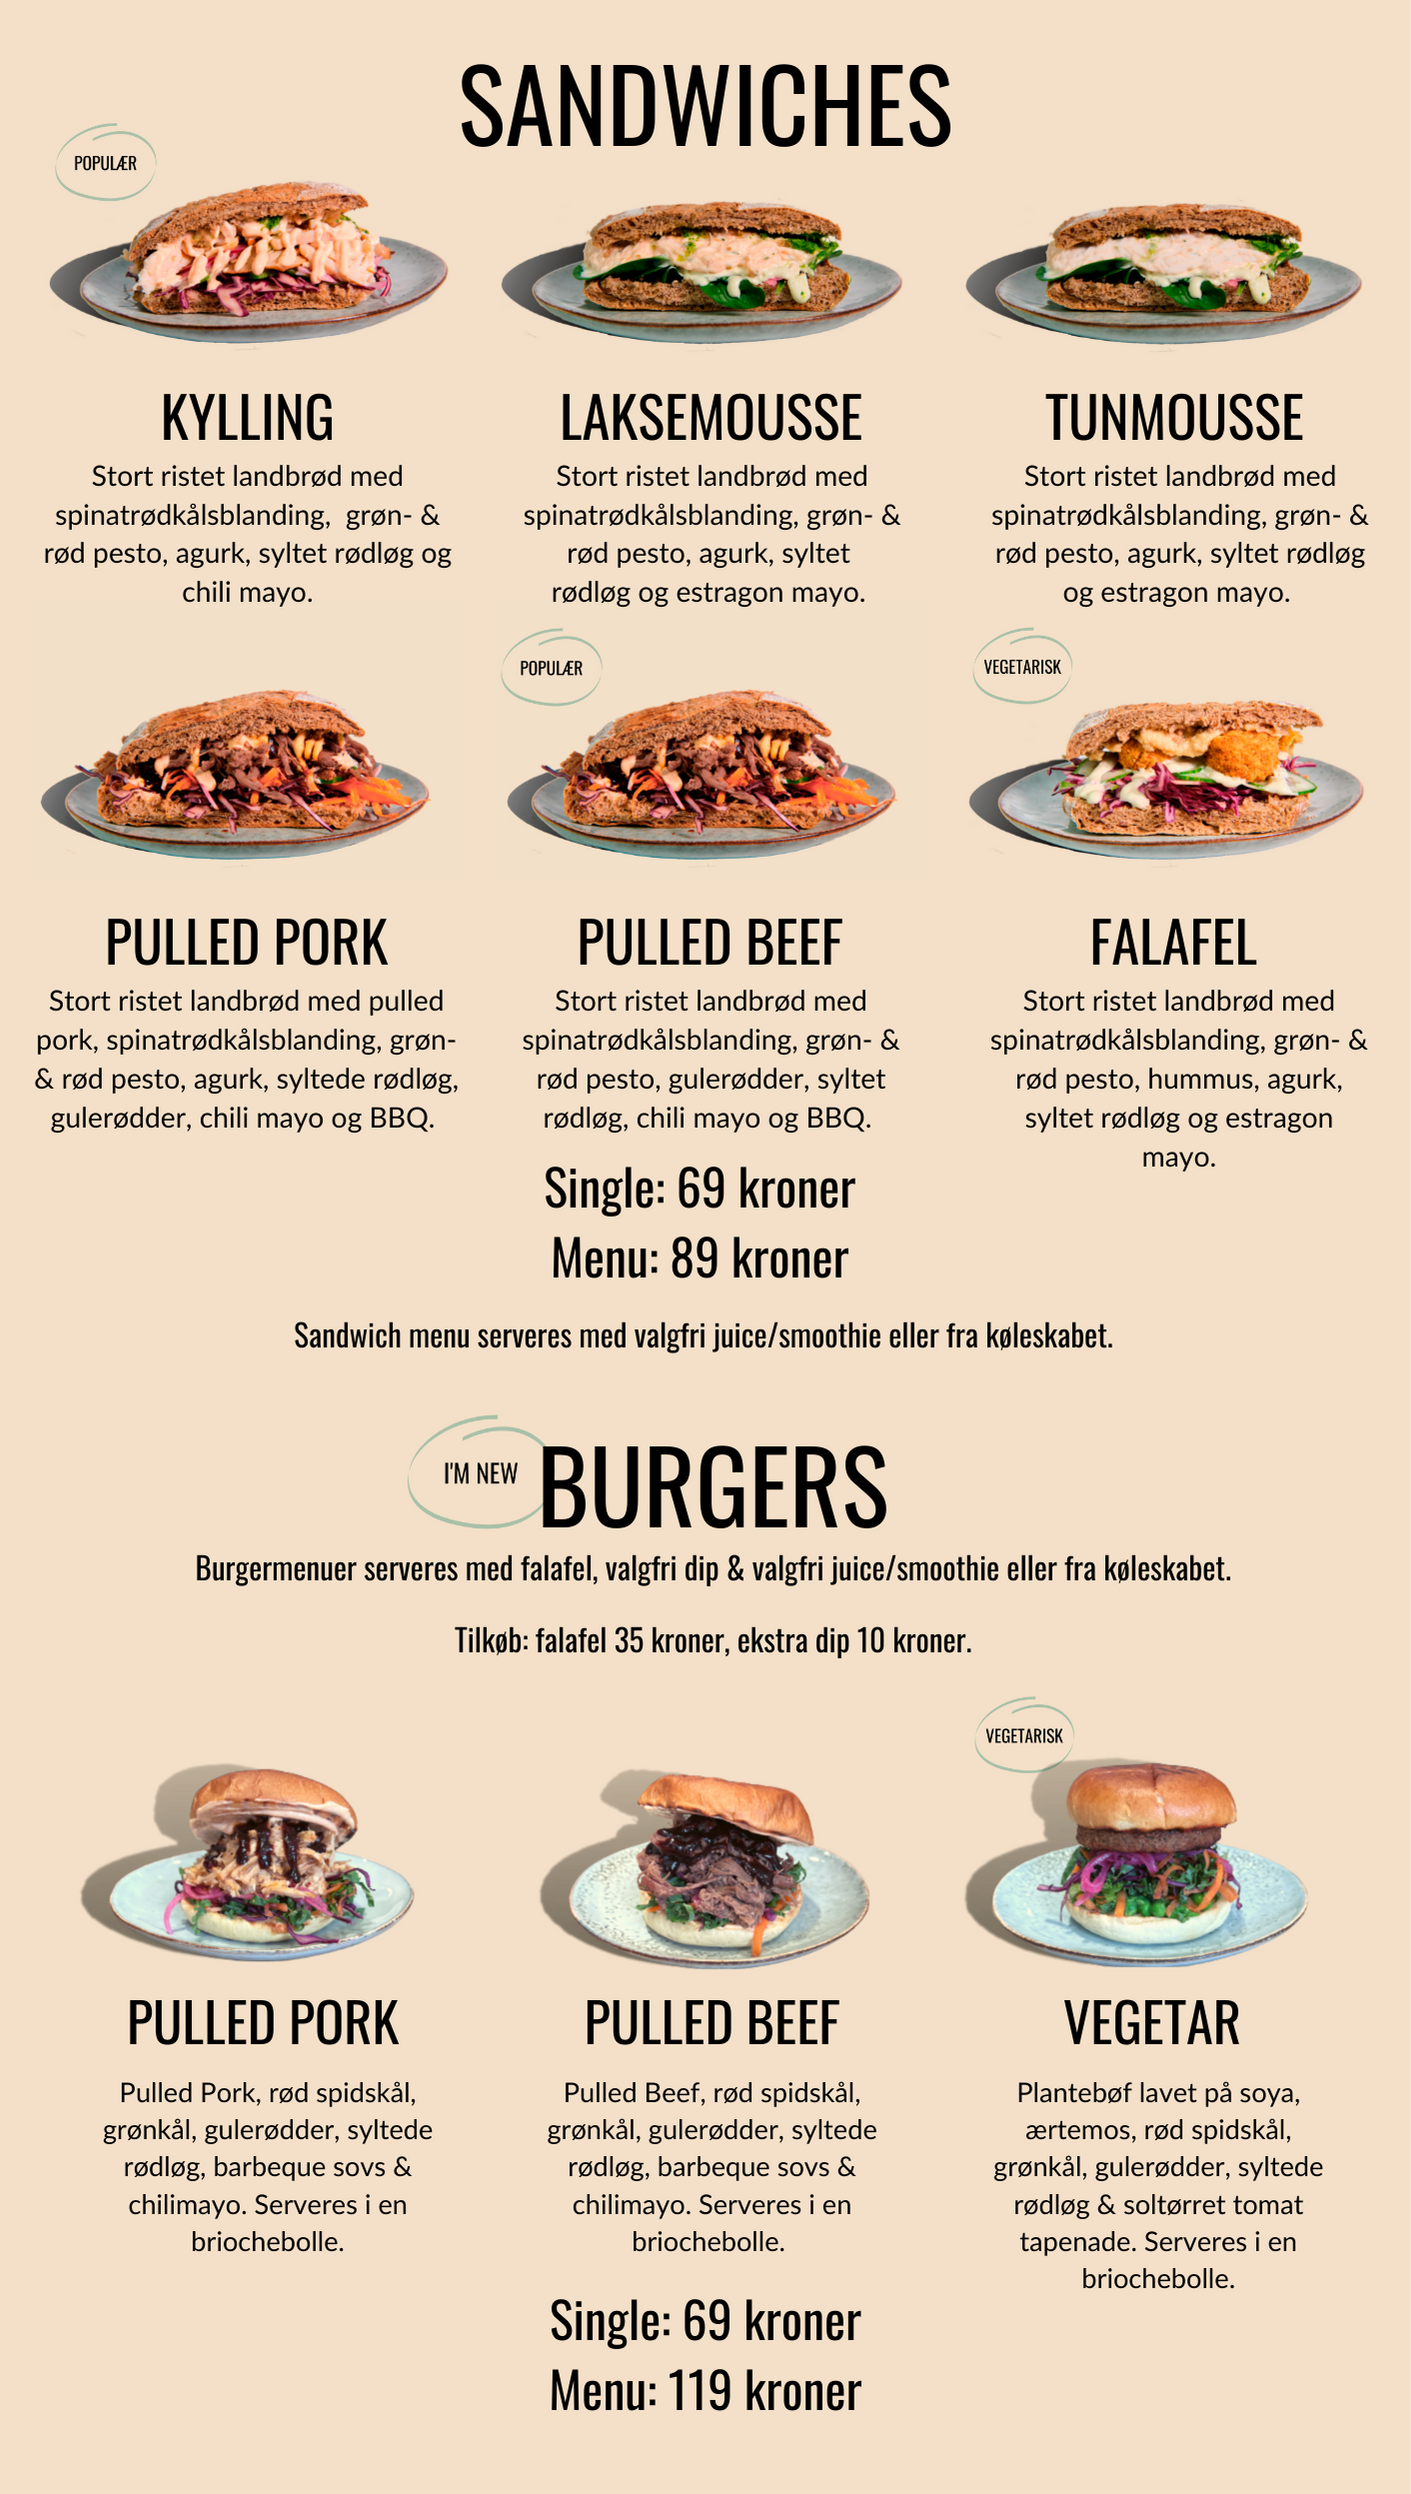 Sandwich _ Burger - Side 2